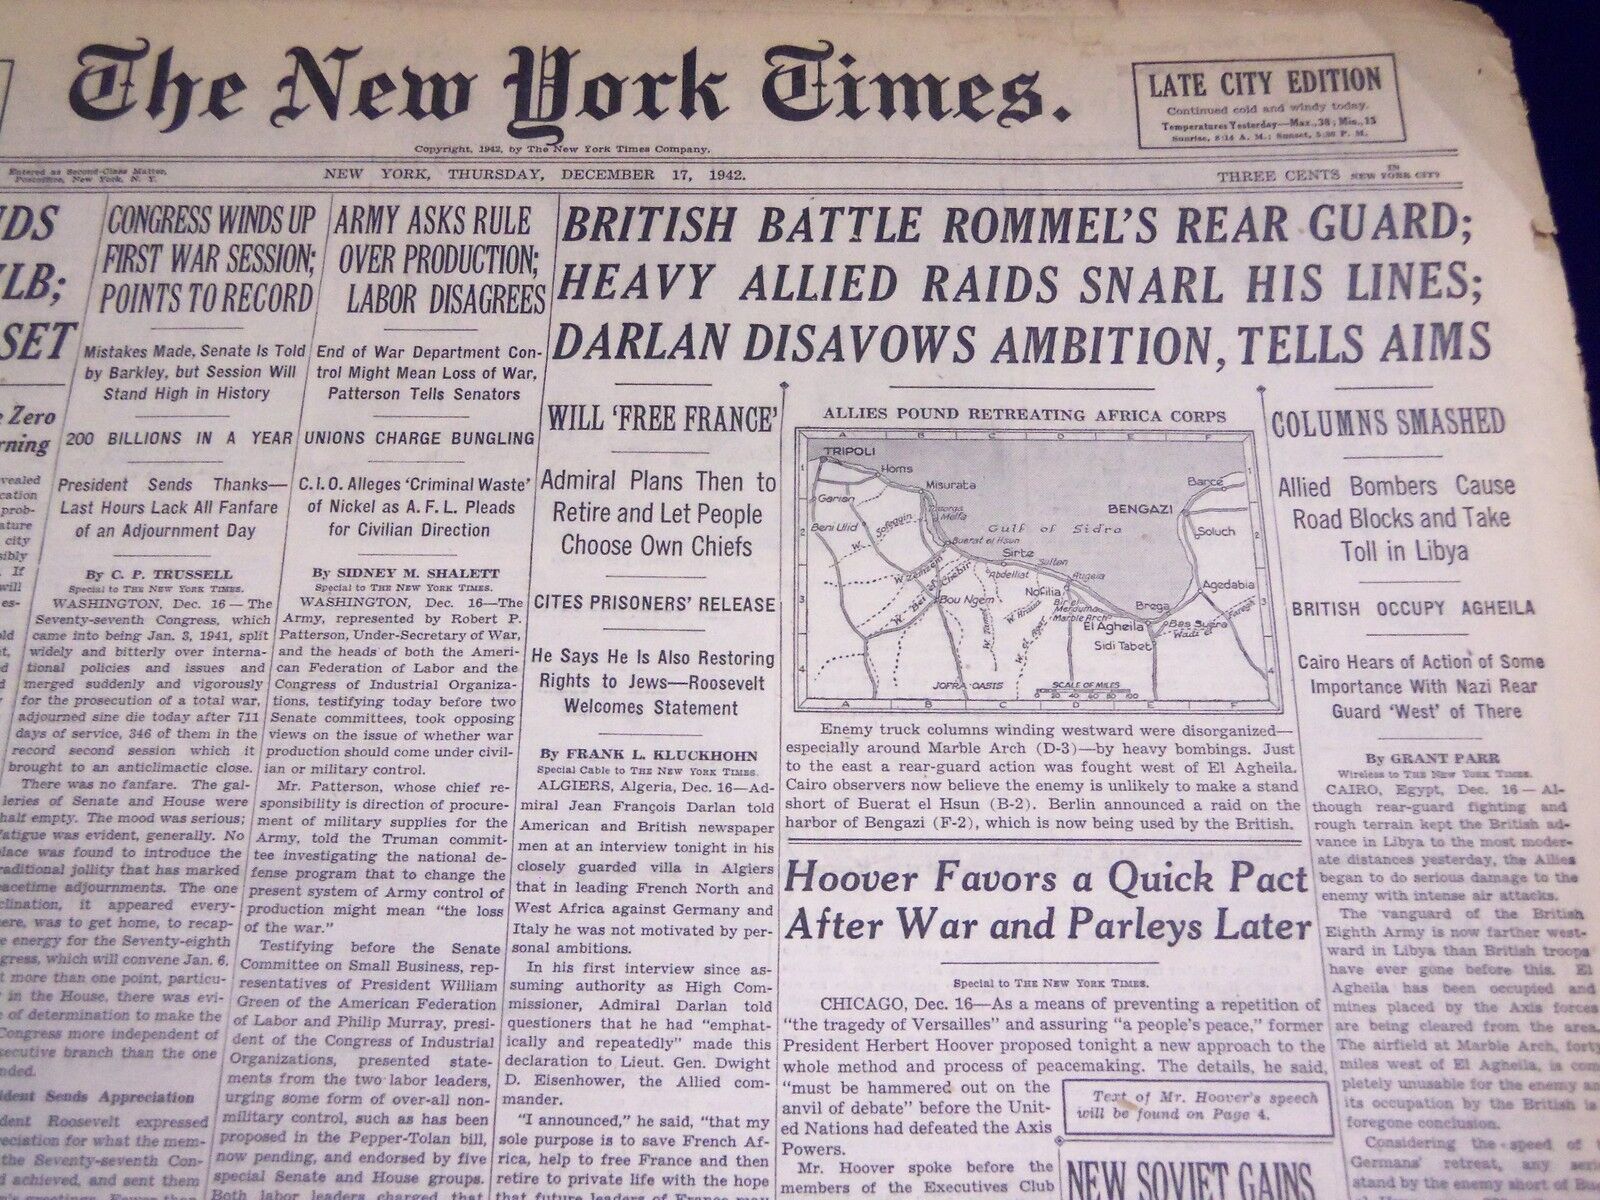 1942 DECEMBER 17 NEW YORK TIMES - BRITISH BATTLE ROMMEL'S REAR GUARD - NT 4438